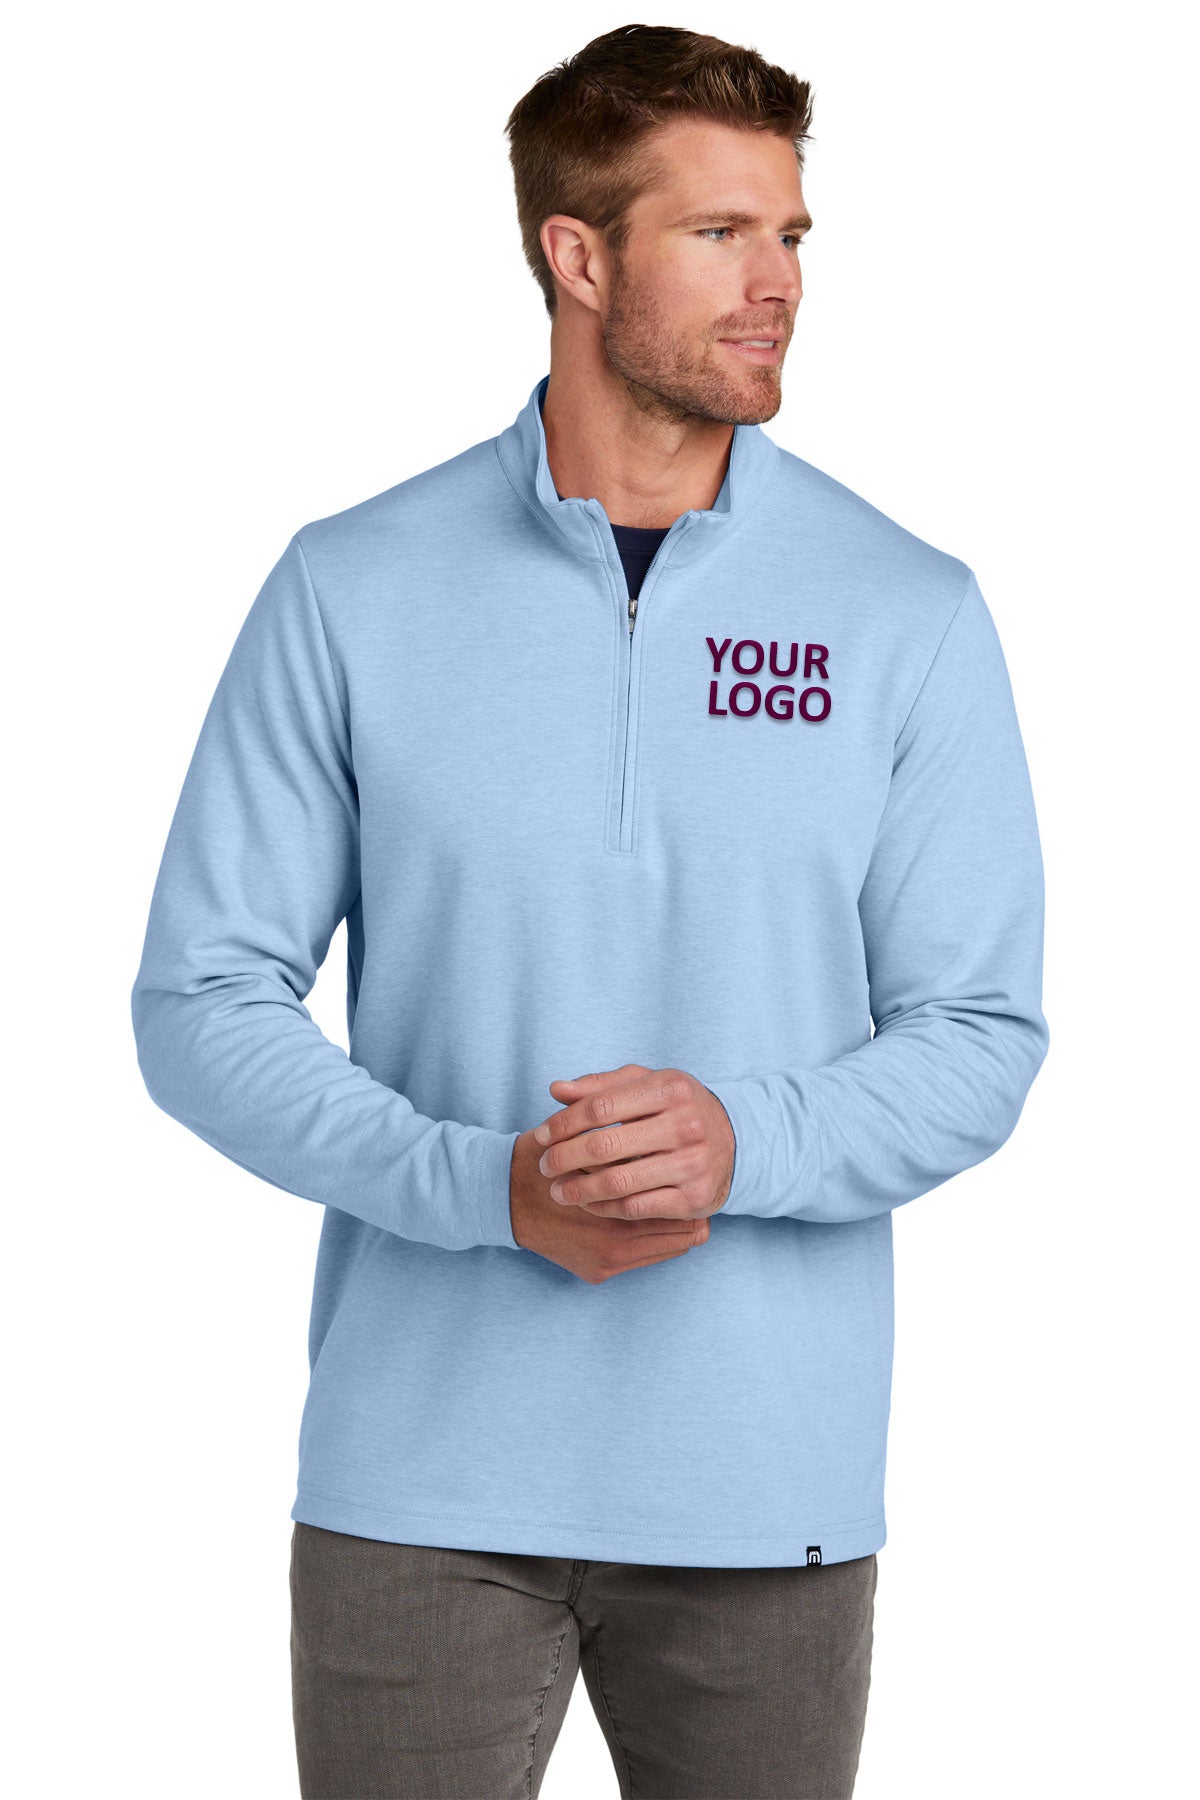 sweatshirts with logos